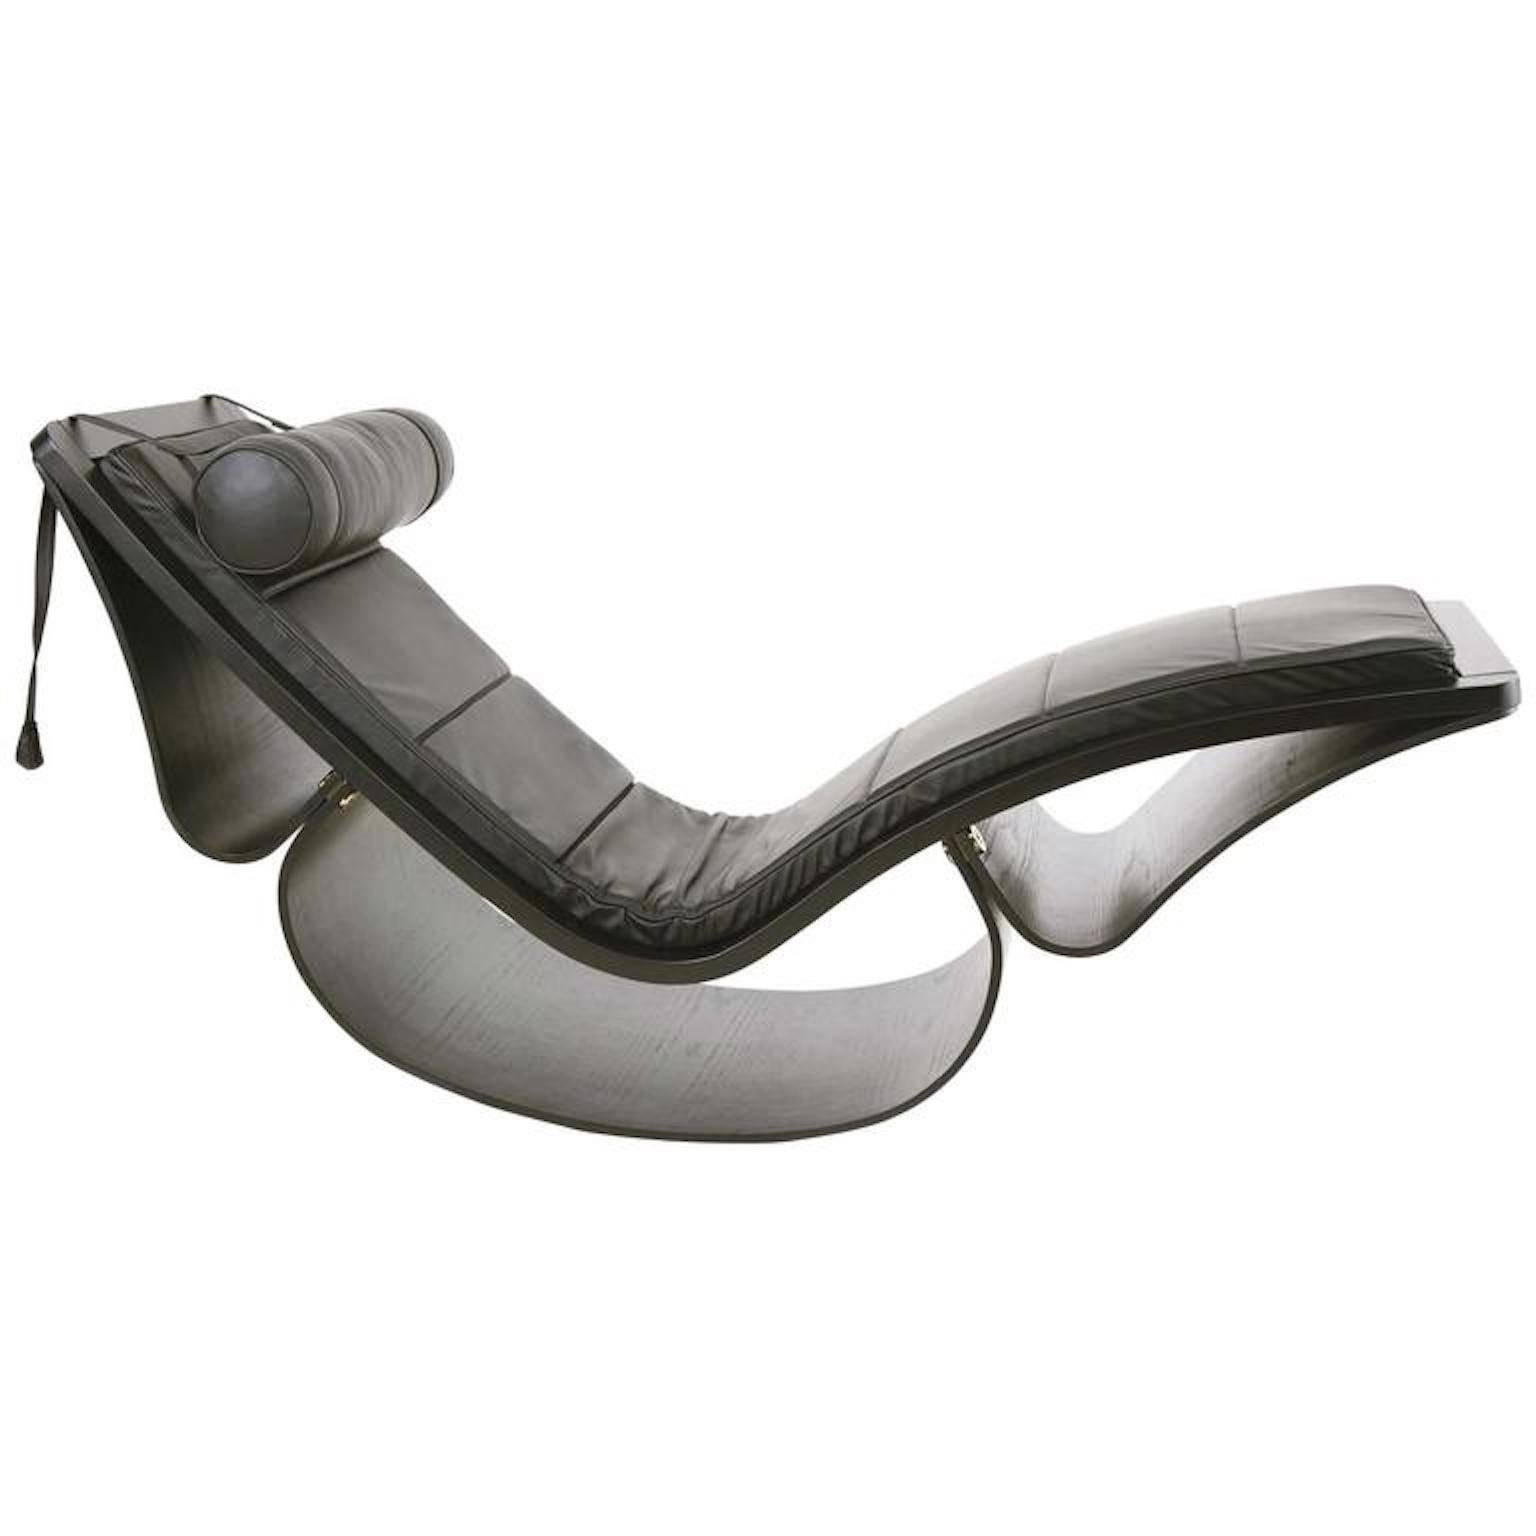 Oscar Niemeyer, "Rio" Chaise Longue, Produzione Fasem, Italy